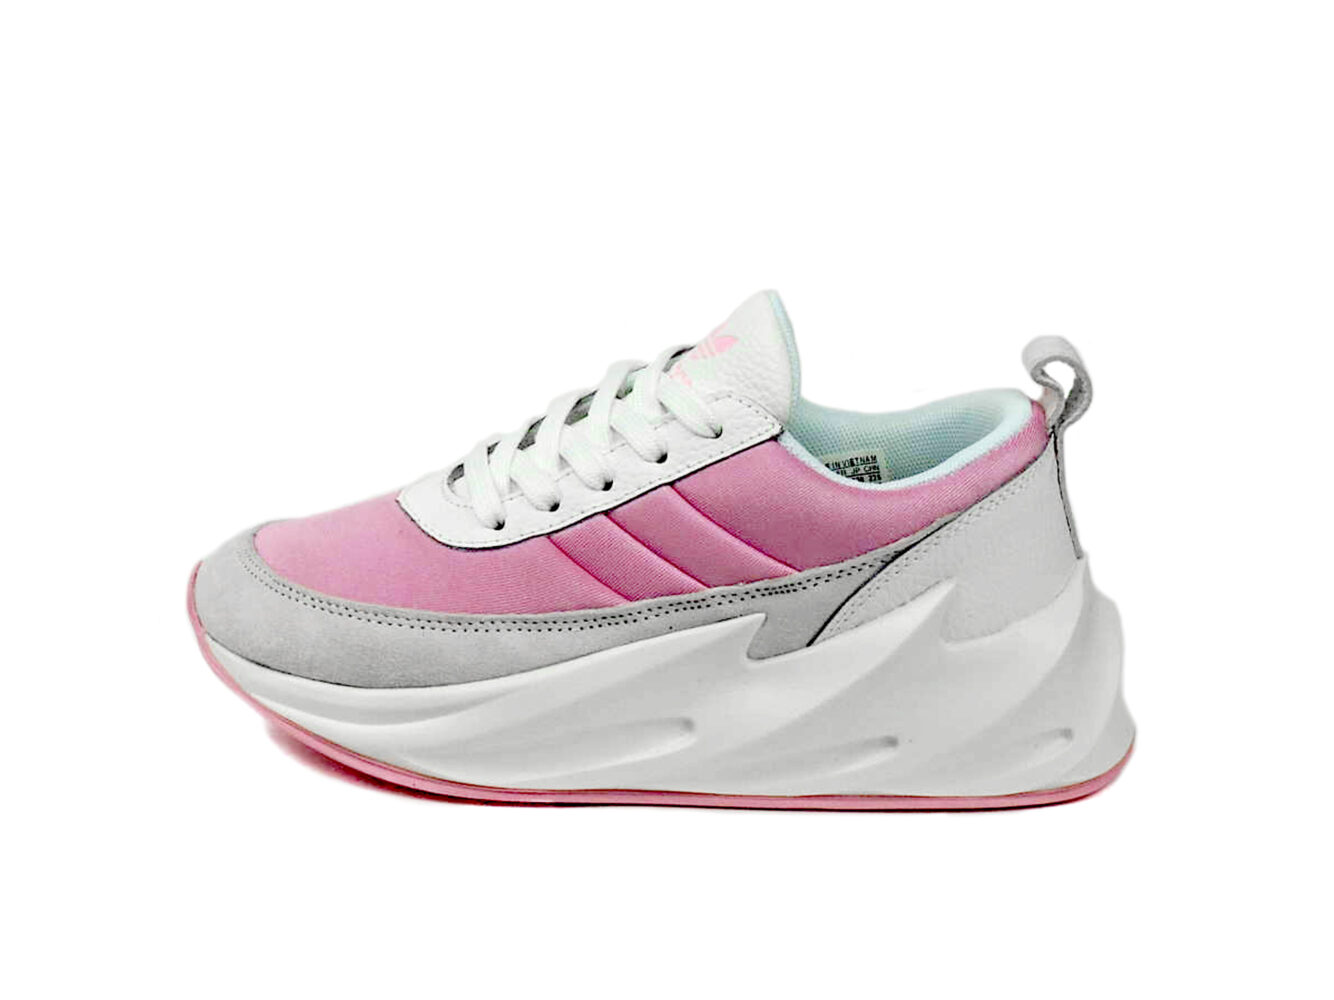 adidas sharks concept boost pink f33866 купить